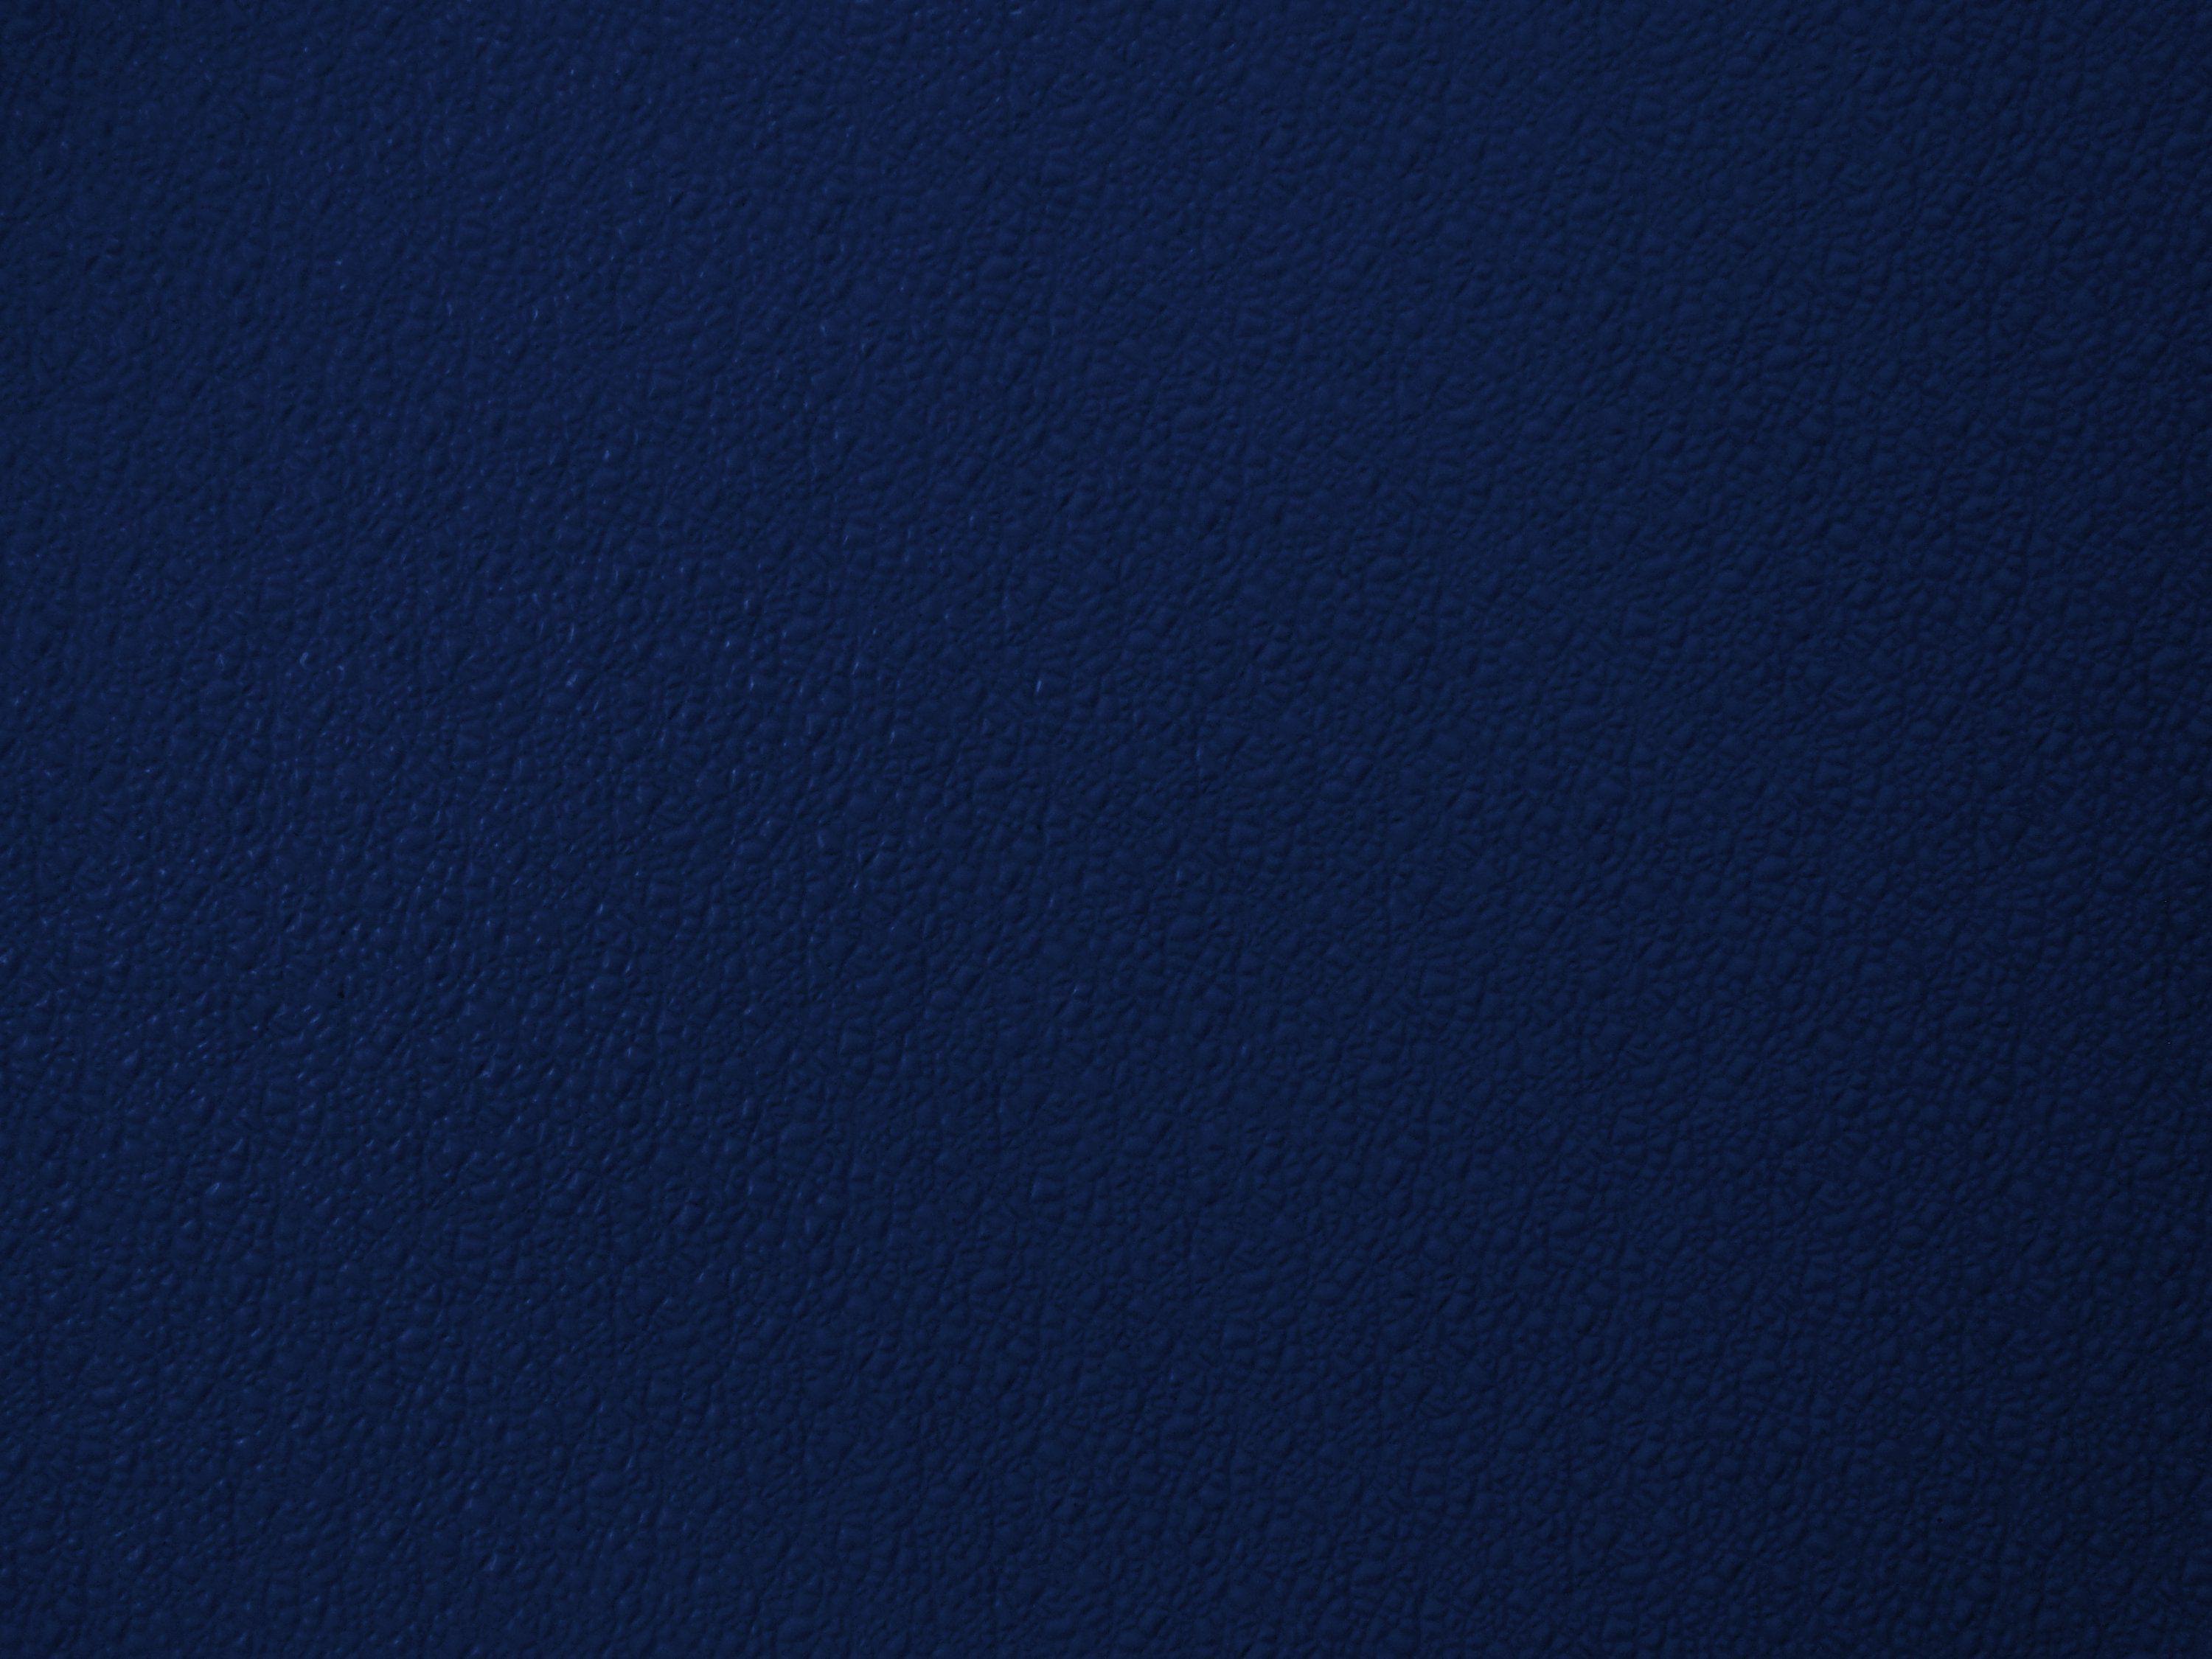 Bumpy Navy Blue Plastic Texture Picture. Free Photograph. Photo